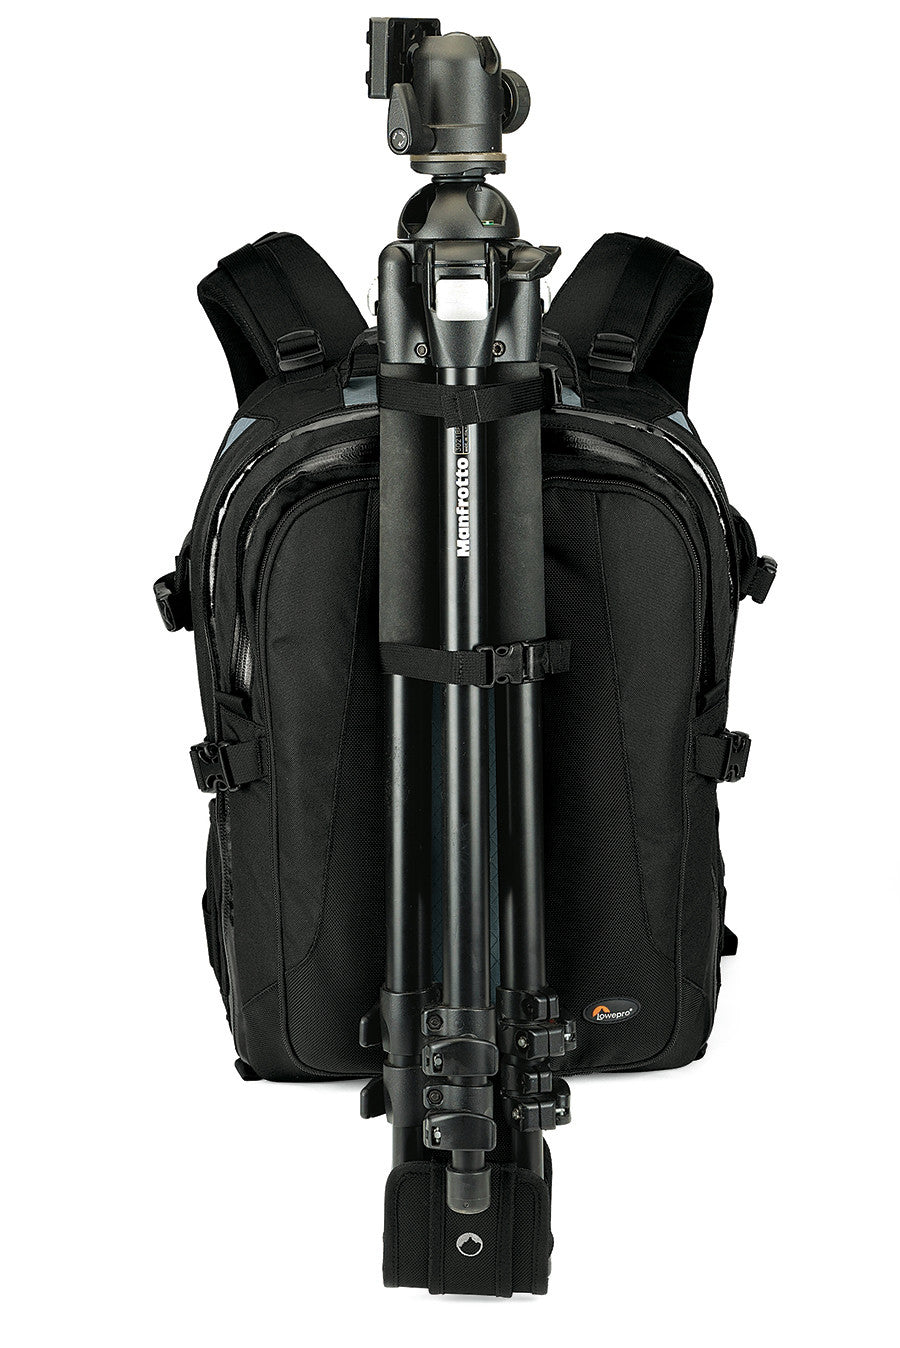 Lowepro Vertex 200 AW Camera and Laptop Backpack (Black), bags backpacks, Lowepro - Pictureline  - 4